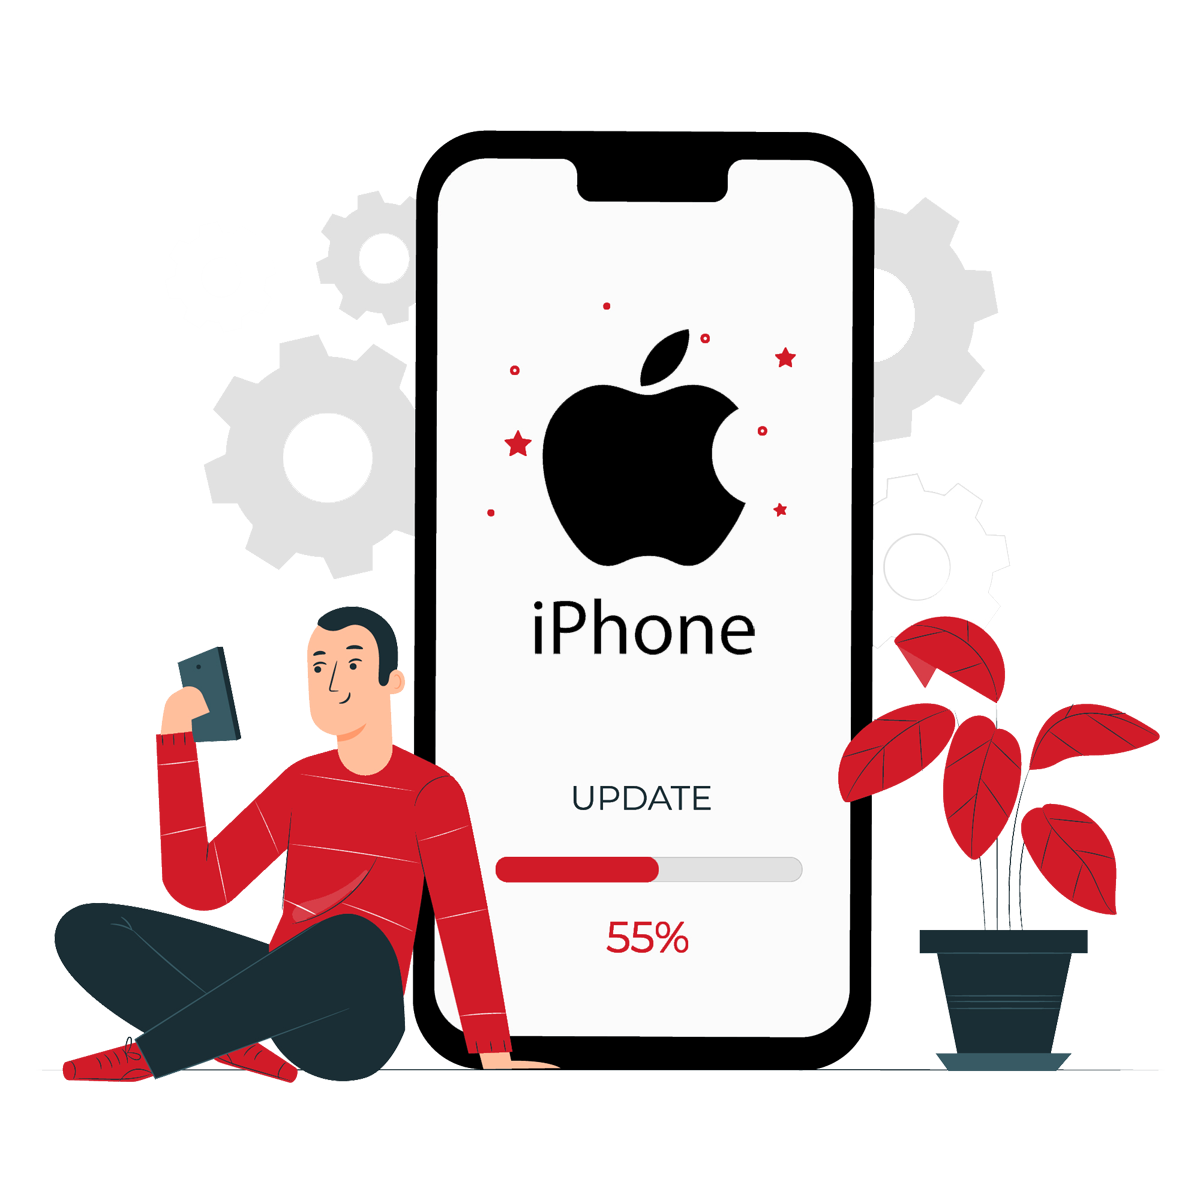 iPhone Application Development Services